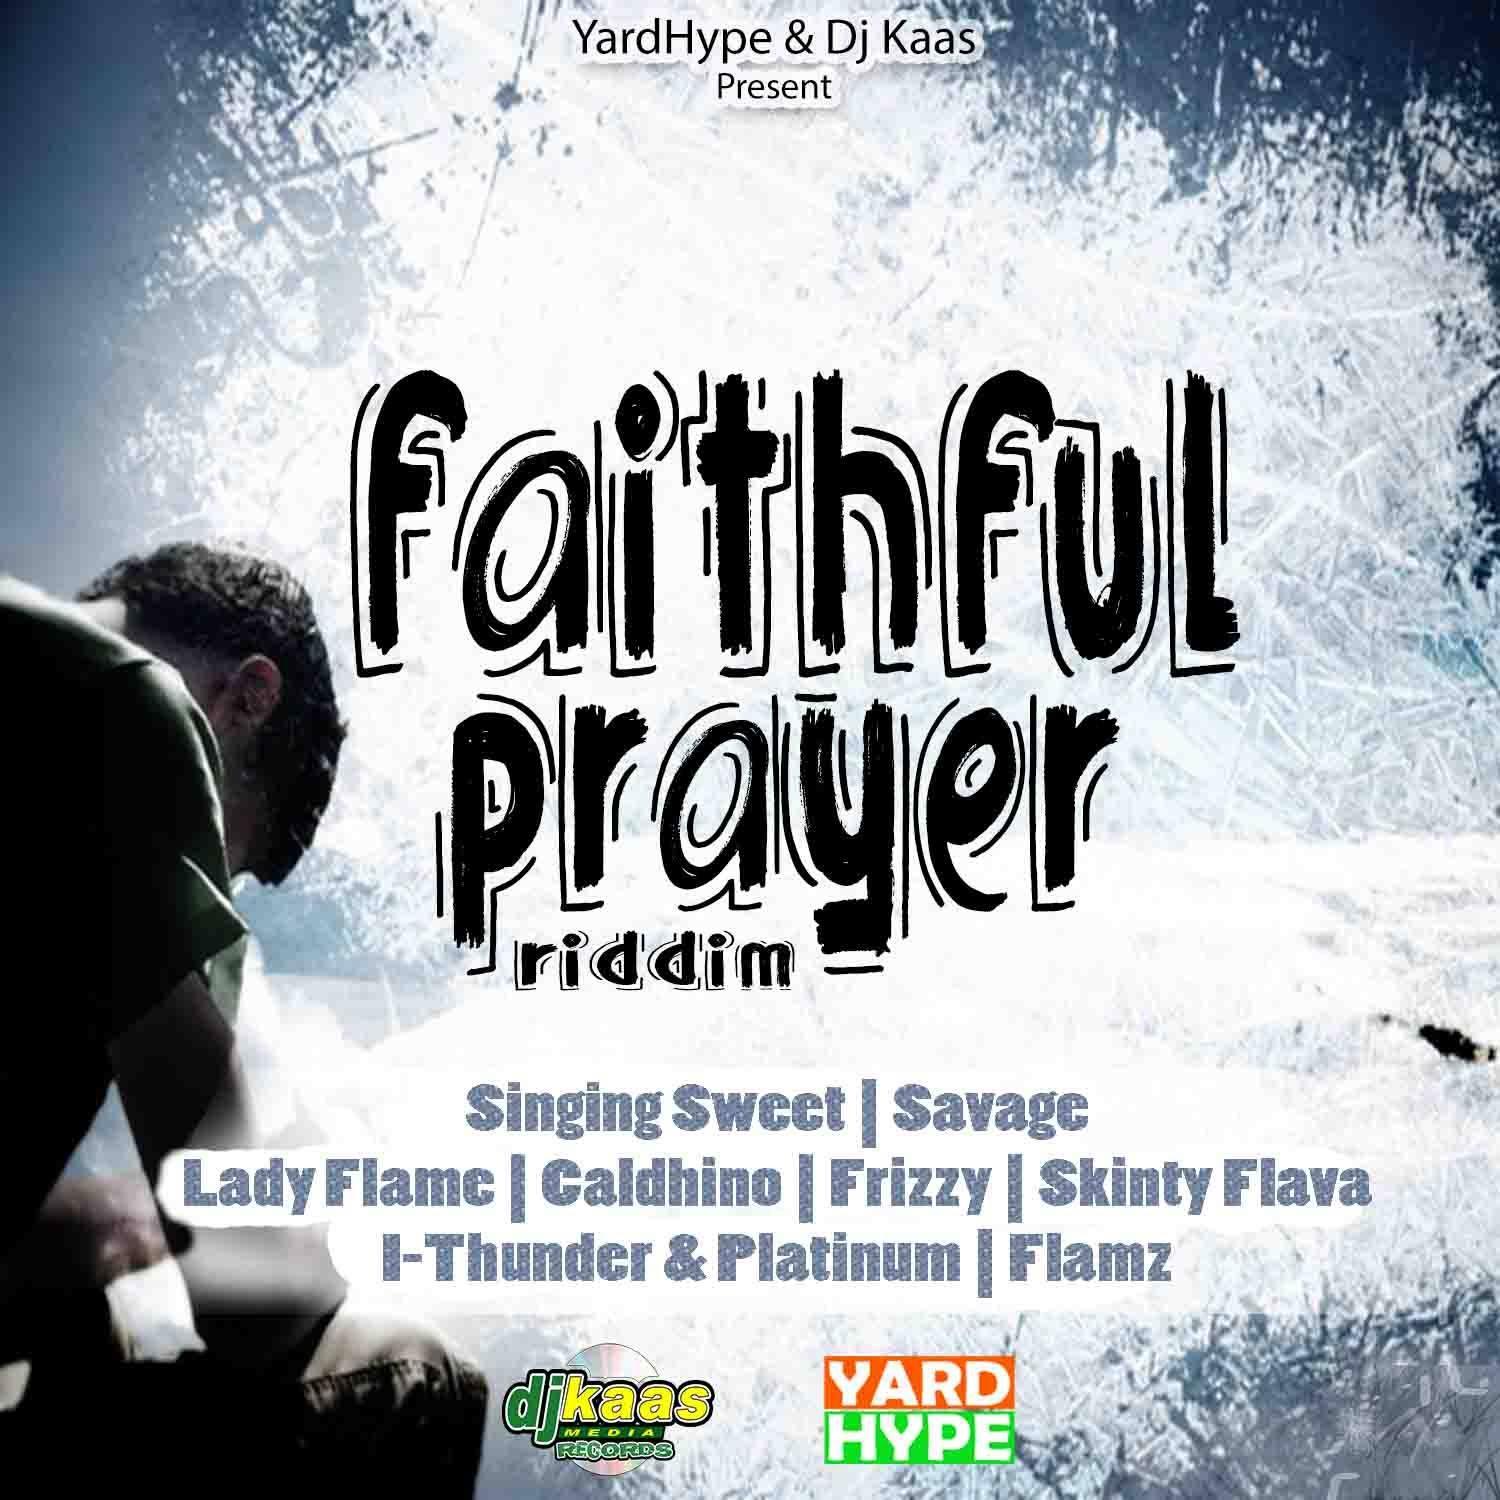 faithful prayer riddim - yardhype & dj kaas